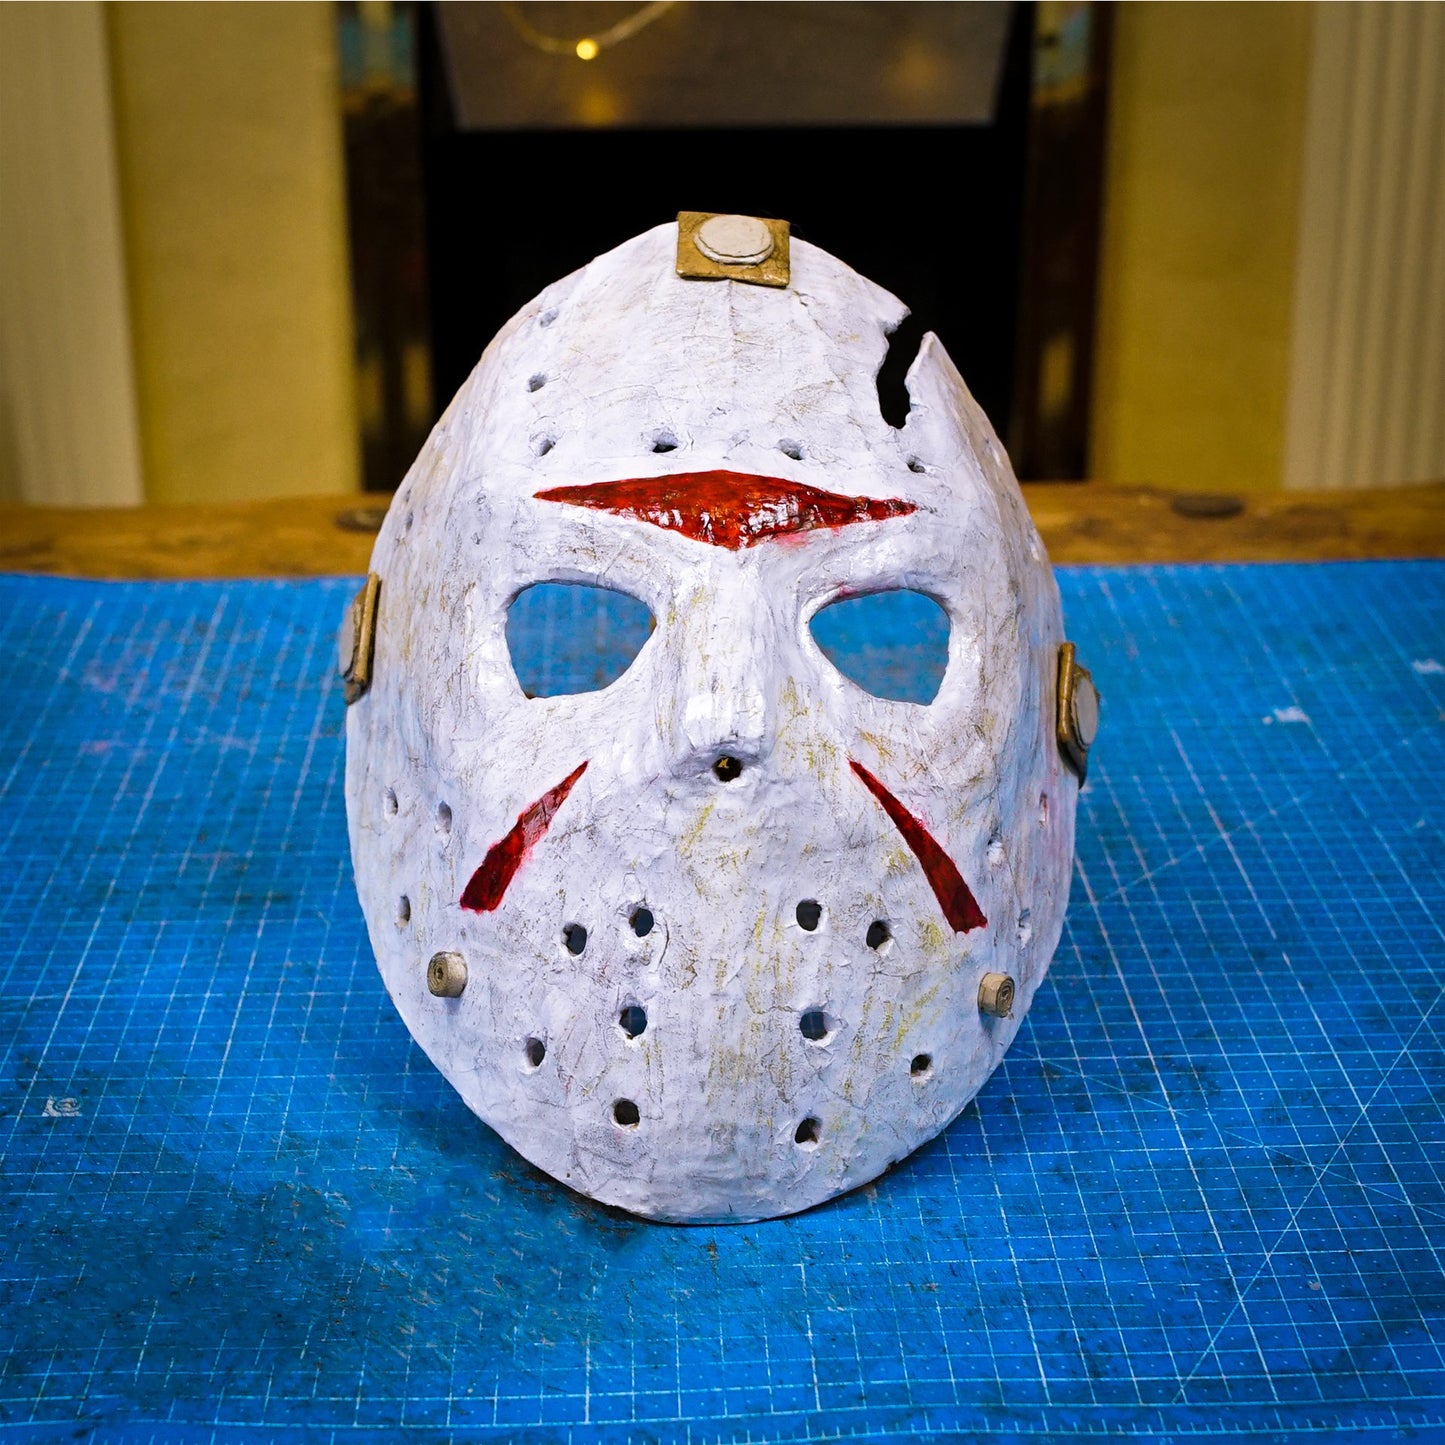 Jason Voorhees Mask for cardboard DIY – Epic Cardboard Props